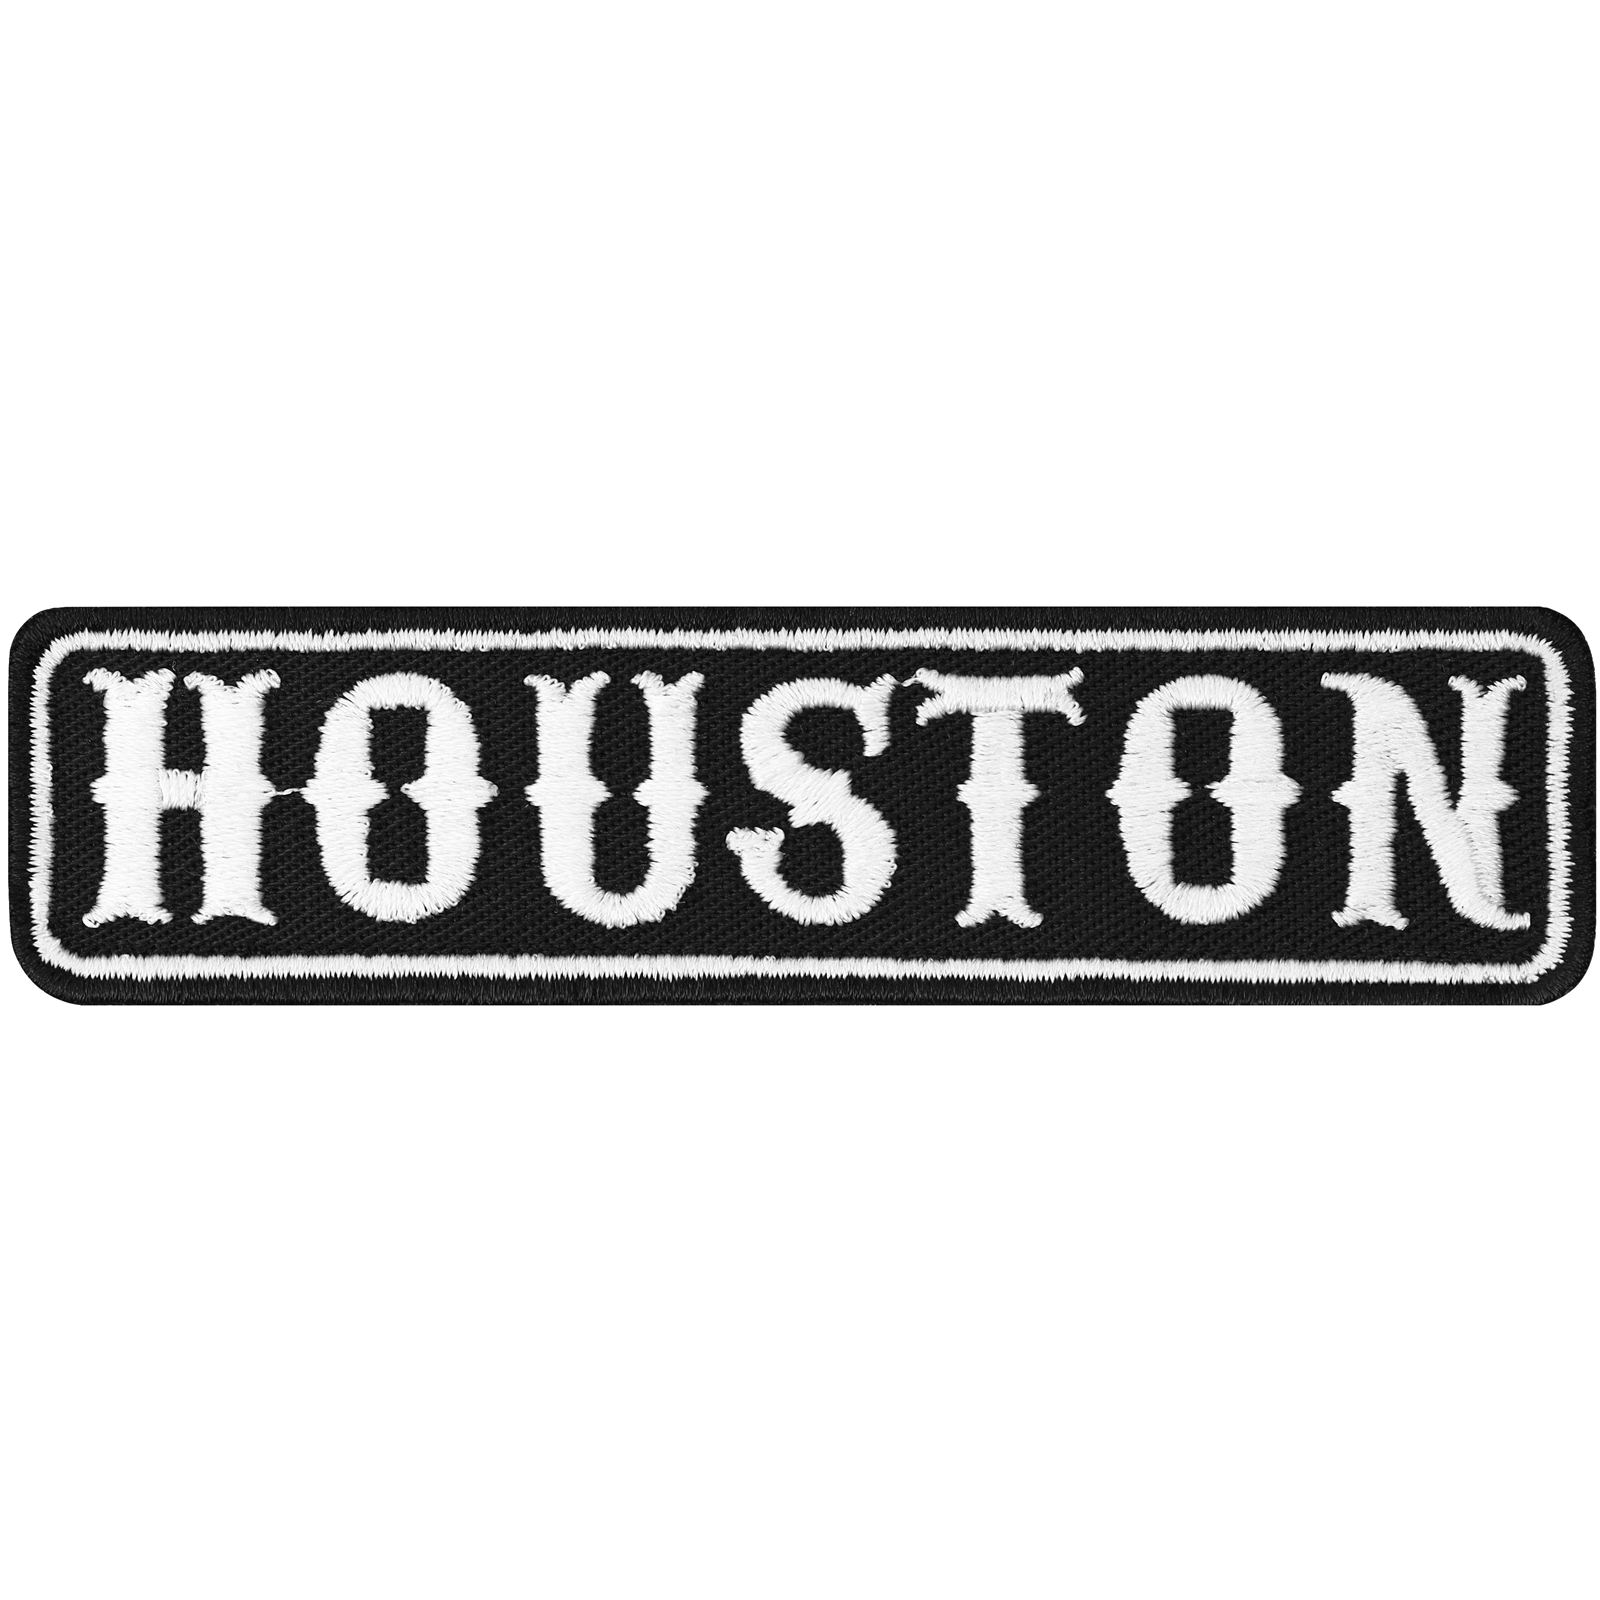 Houston - Patch